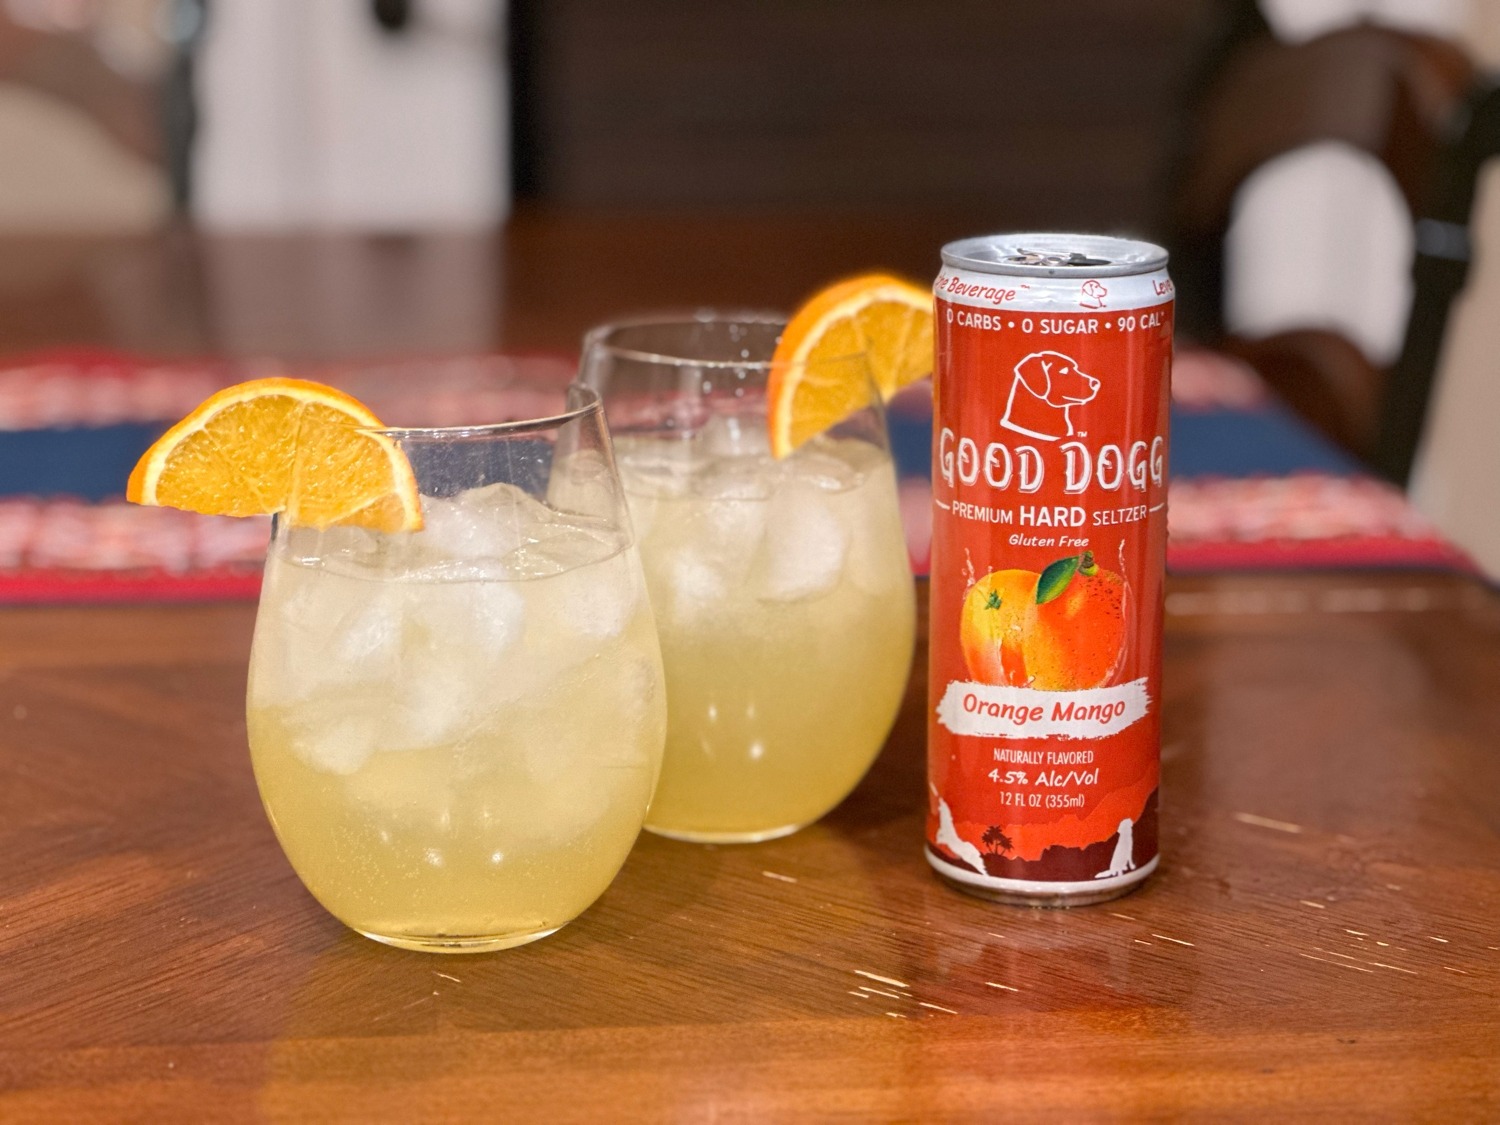 Good Dogg Orange Mango Classic Cocktail